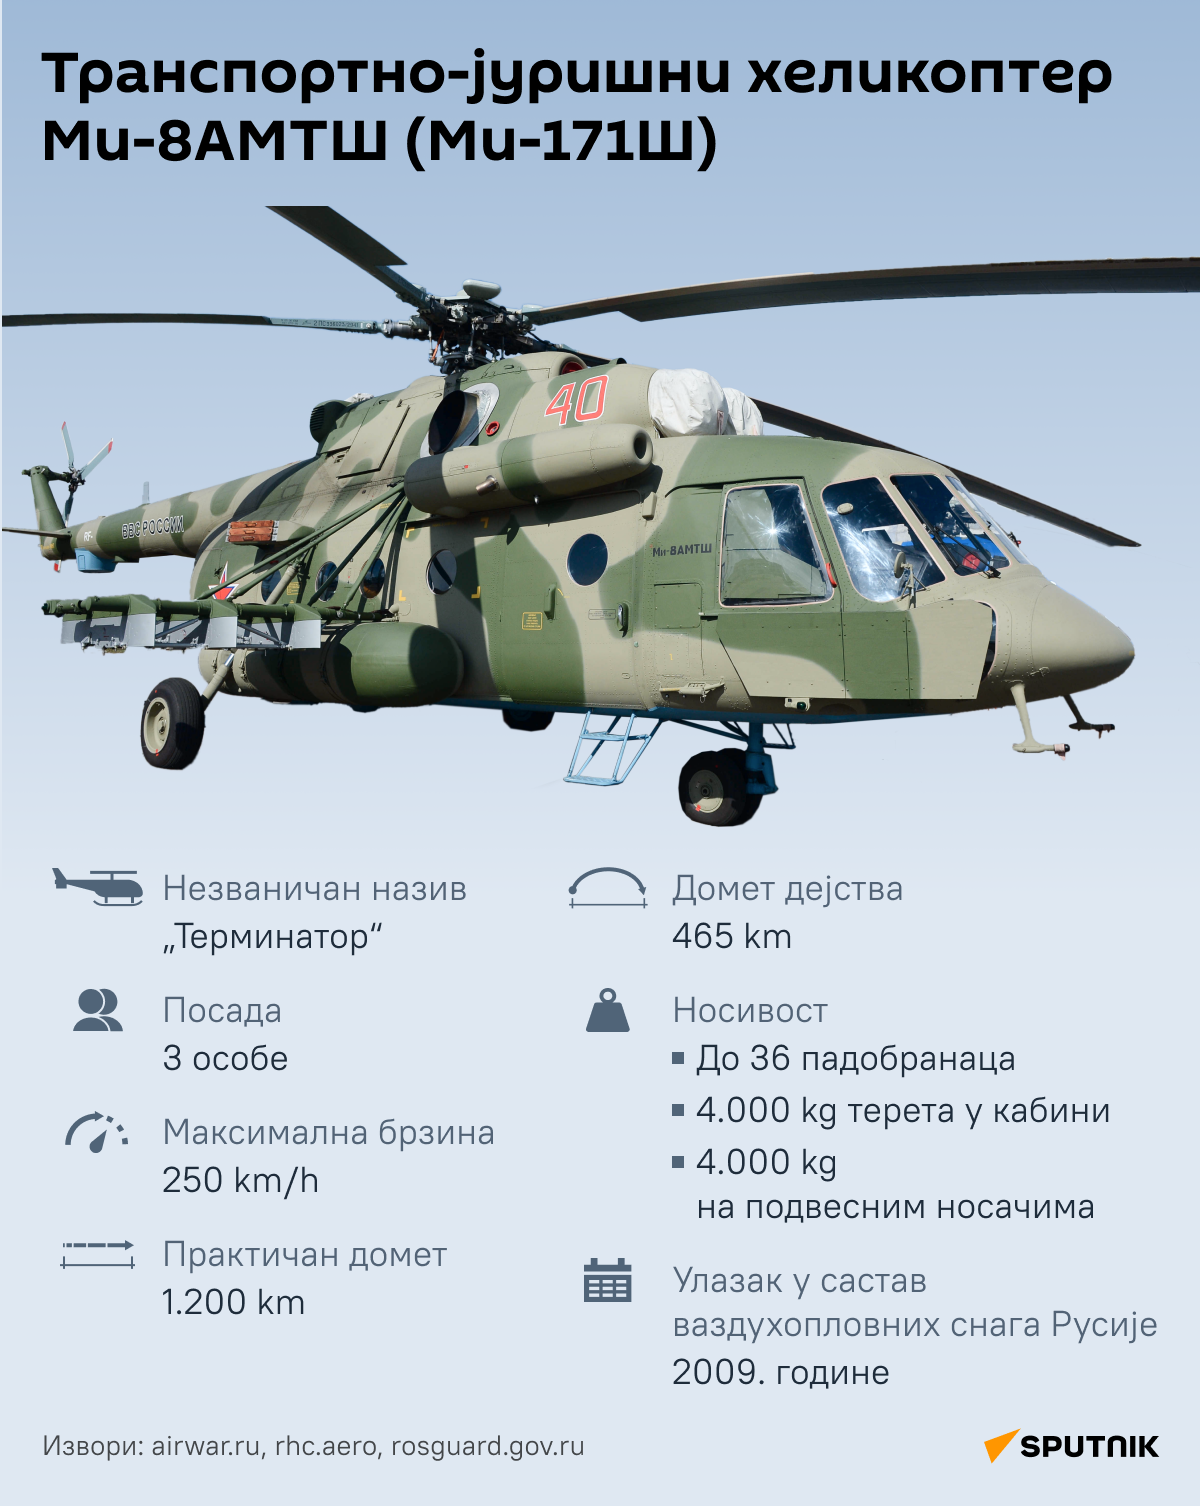 ИНФОГРАФИКА Транспортно-јуришни хеликоптер Ми-8АМТШ (Ми-171Ш) Ћирилица деск - Sputnik Србија